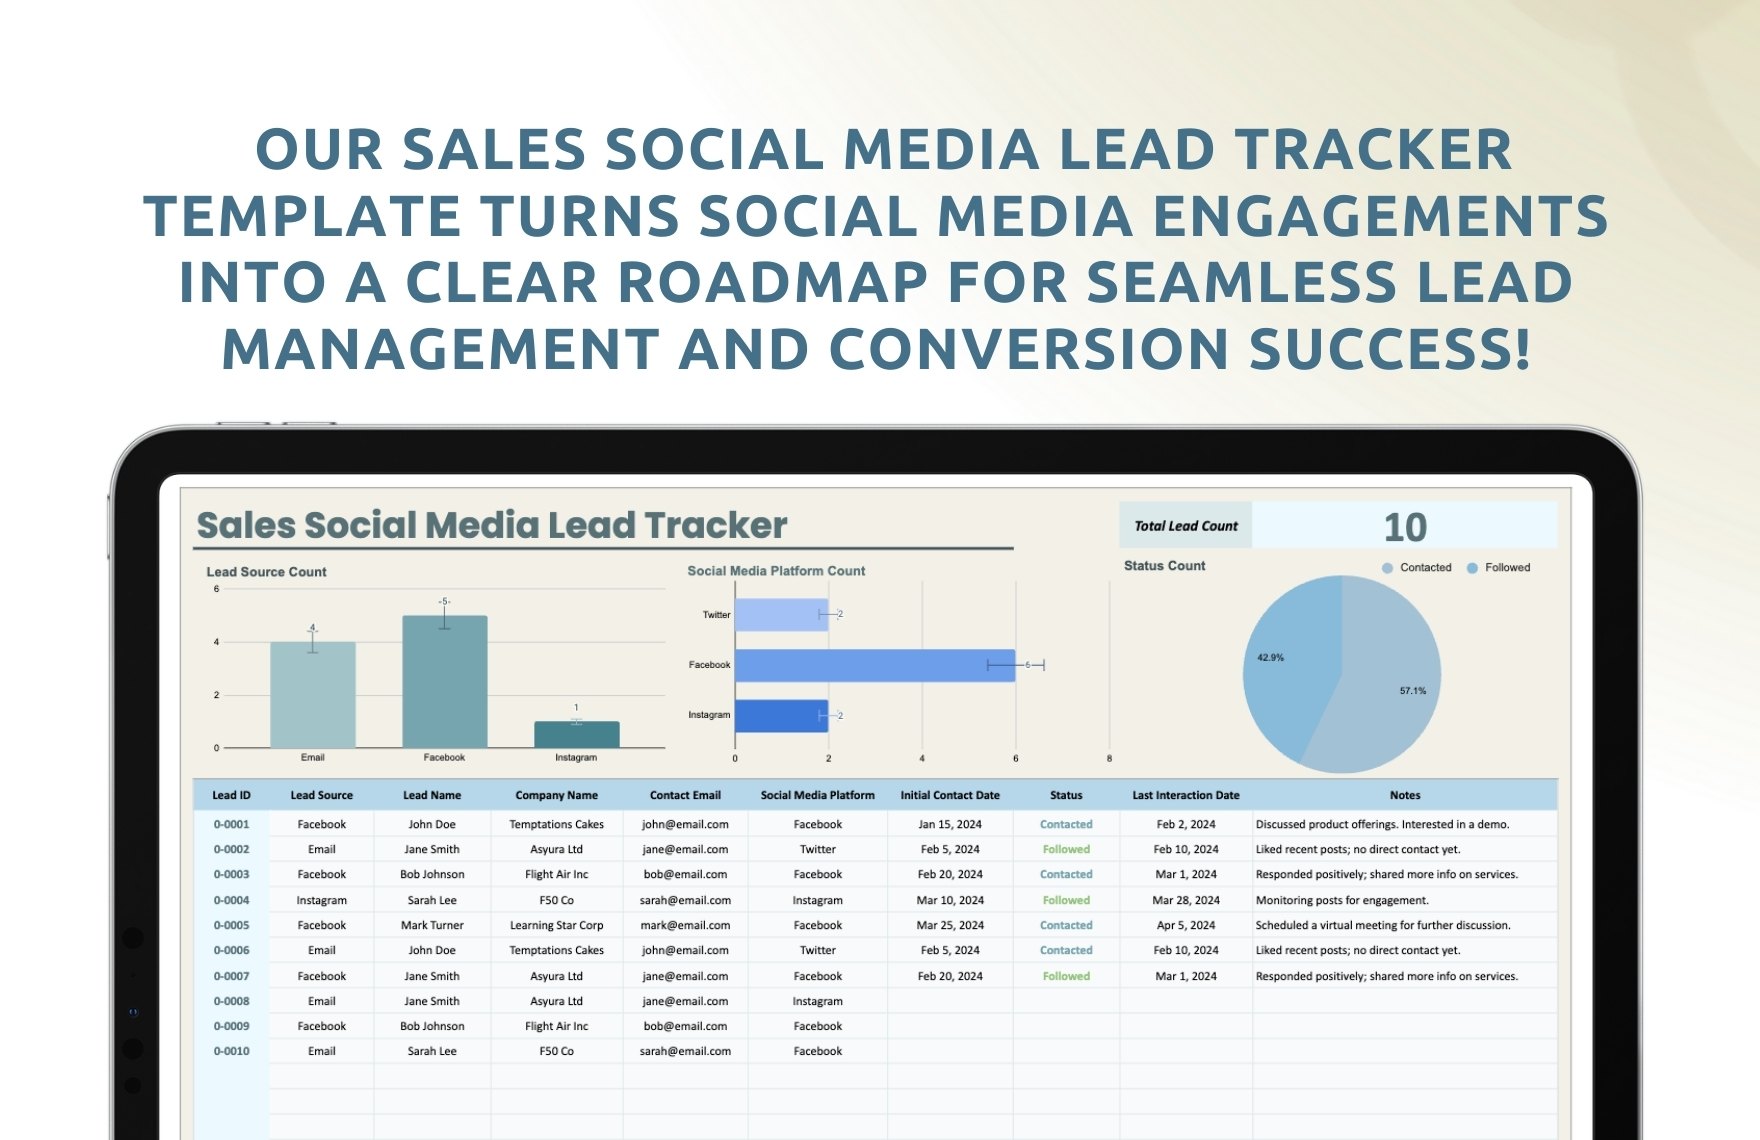 Sales Social Media Lead Tracker Template